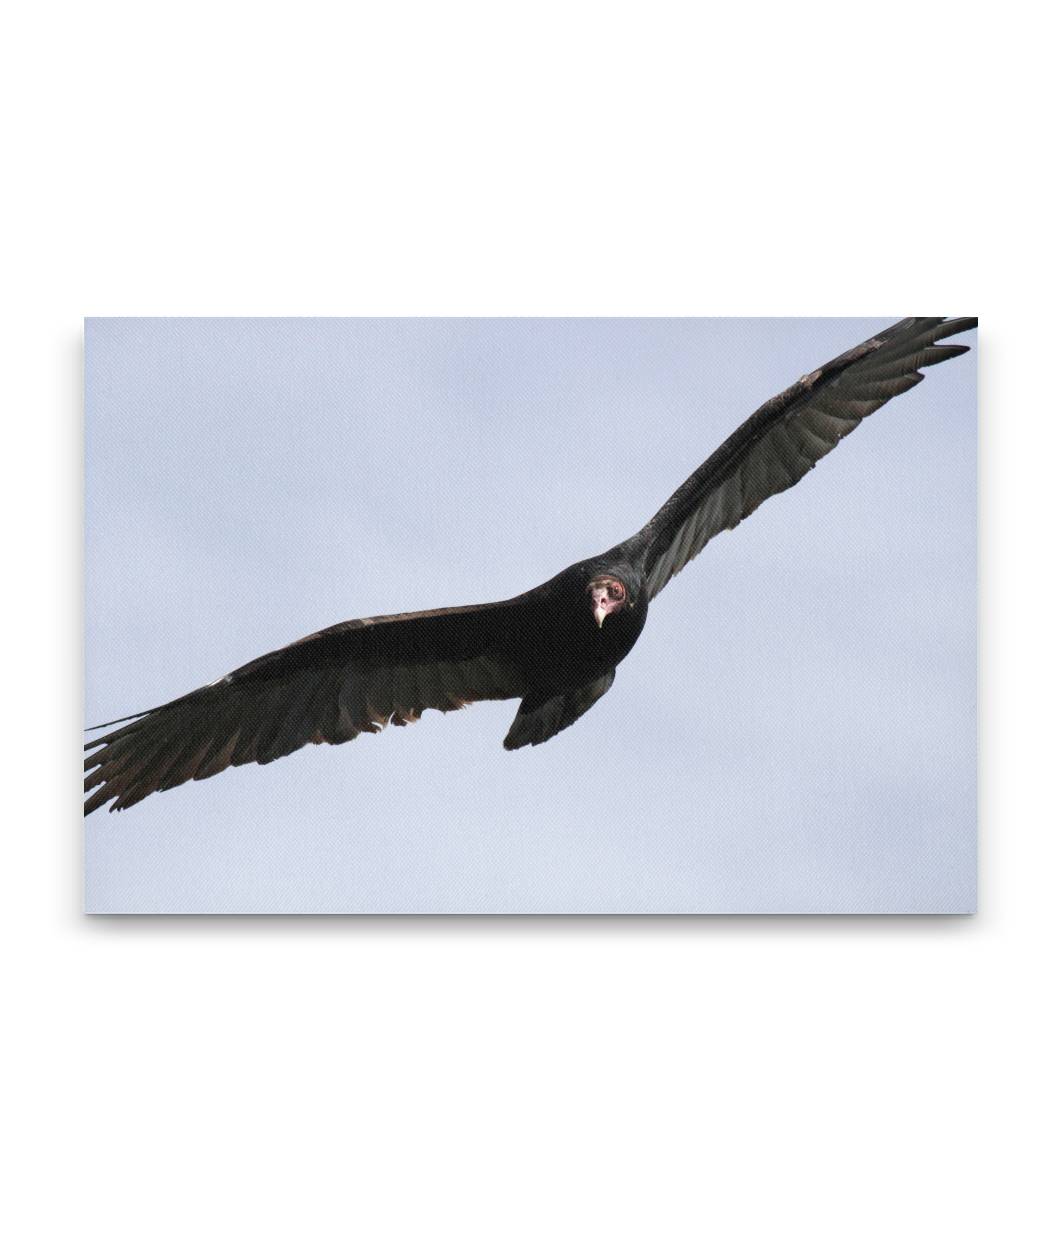 Turkey Vulture in flight, Carpenter Mountain, Willamette National Forest, Oregon